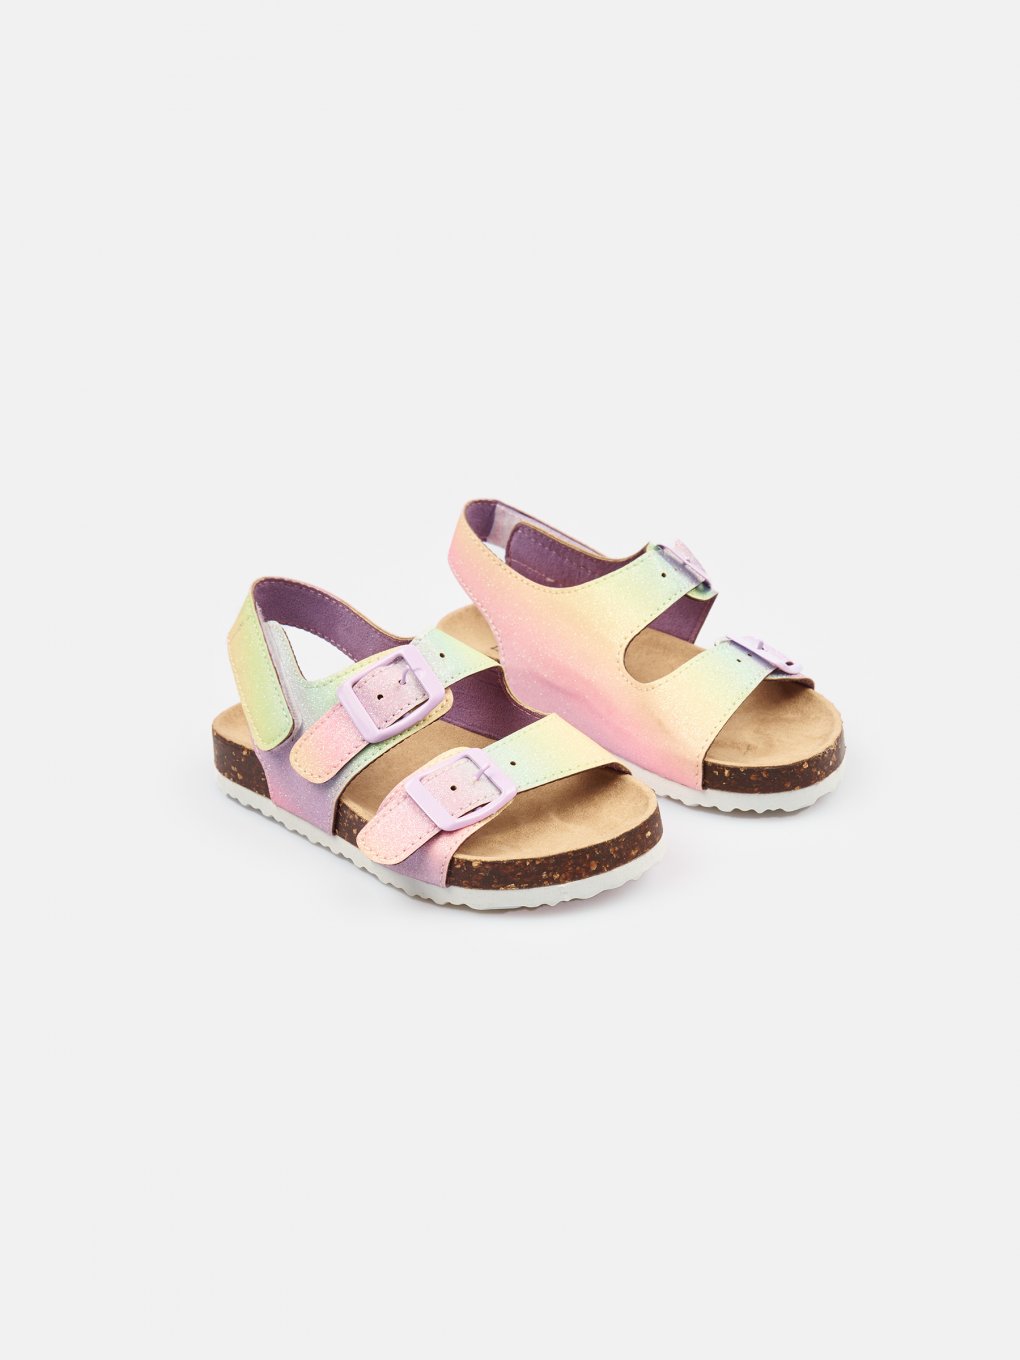 Rainbow sandals with velcro fastener